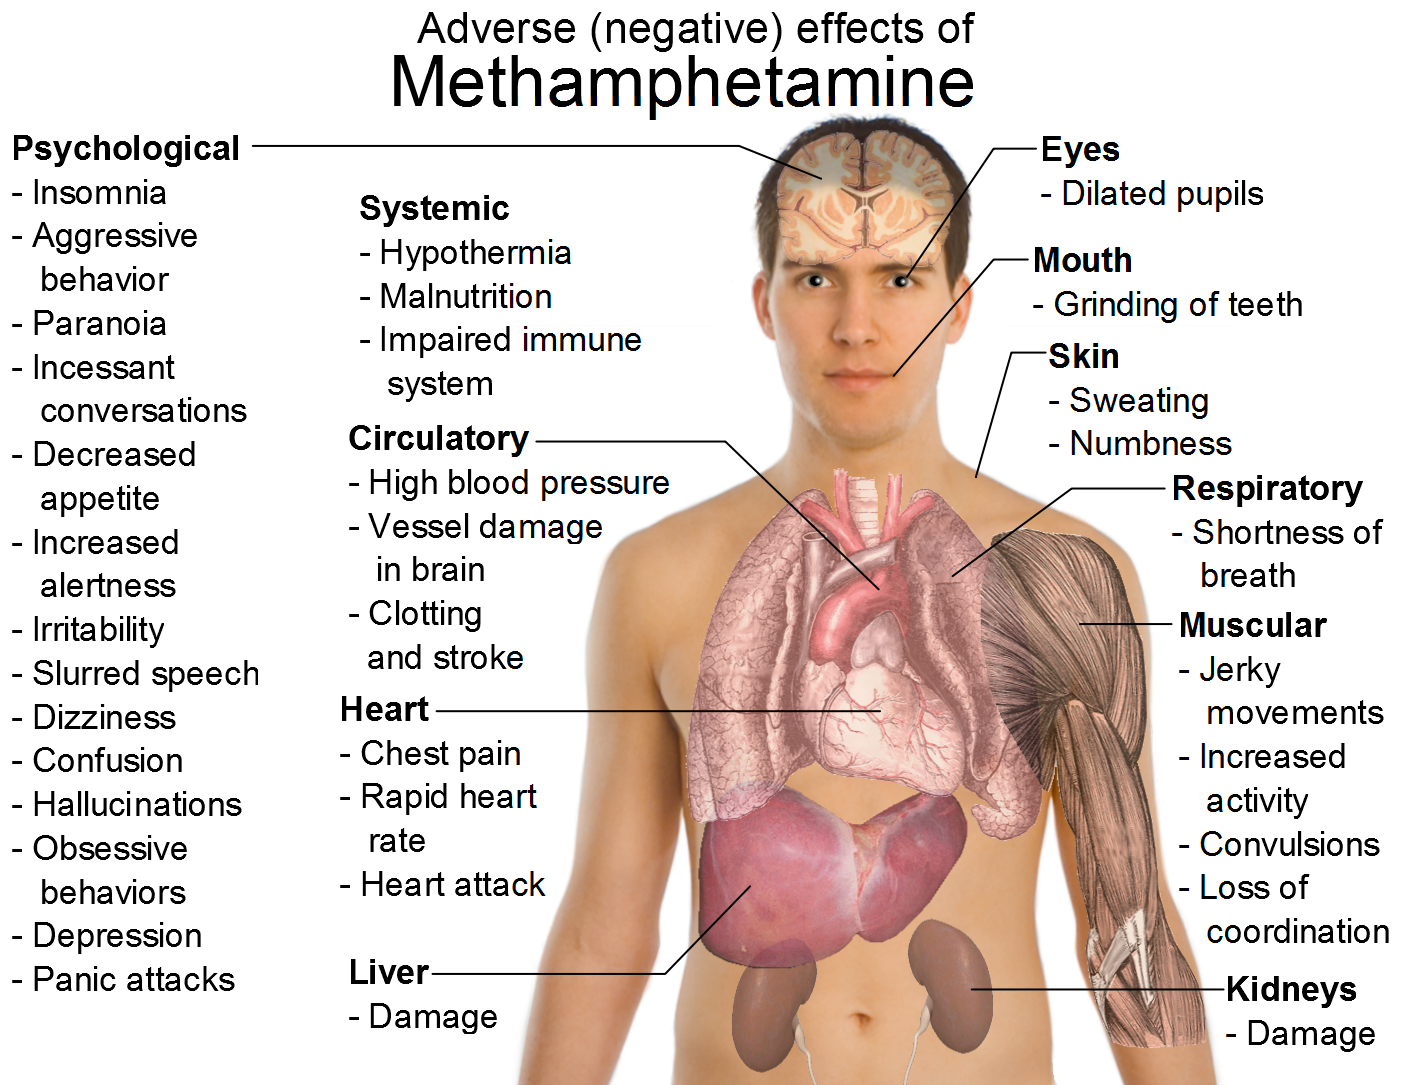 http://1.bp.blogspot.com/-m_RwozB57Vg/TeUVUIApupI/AAAAAAAAAfI/OTTgUpKQJtg/s1600/Effects_of_metamphetamine.png